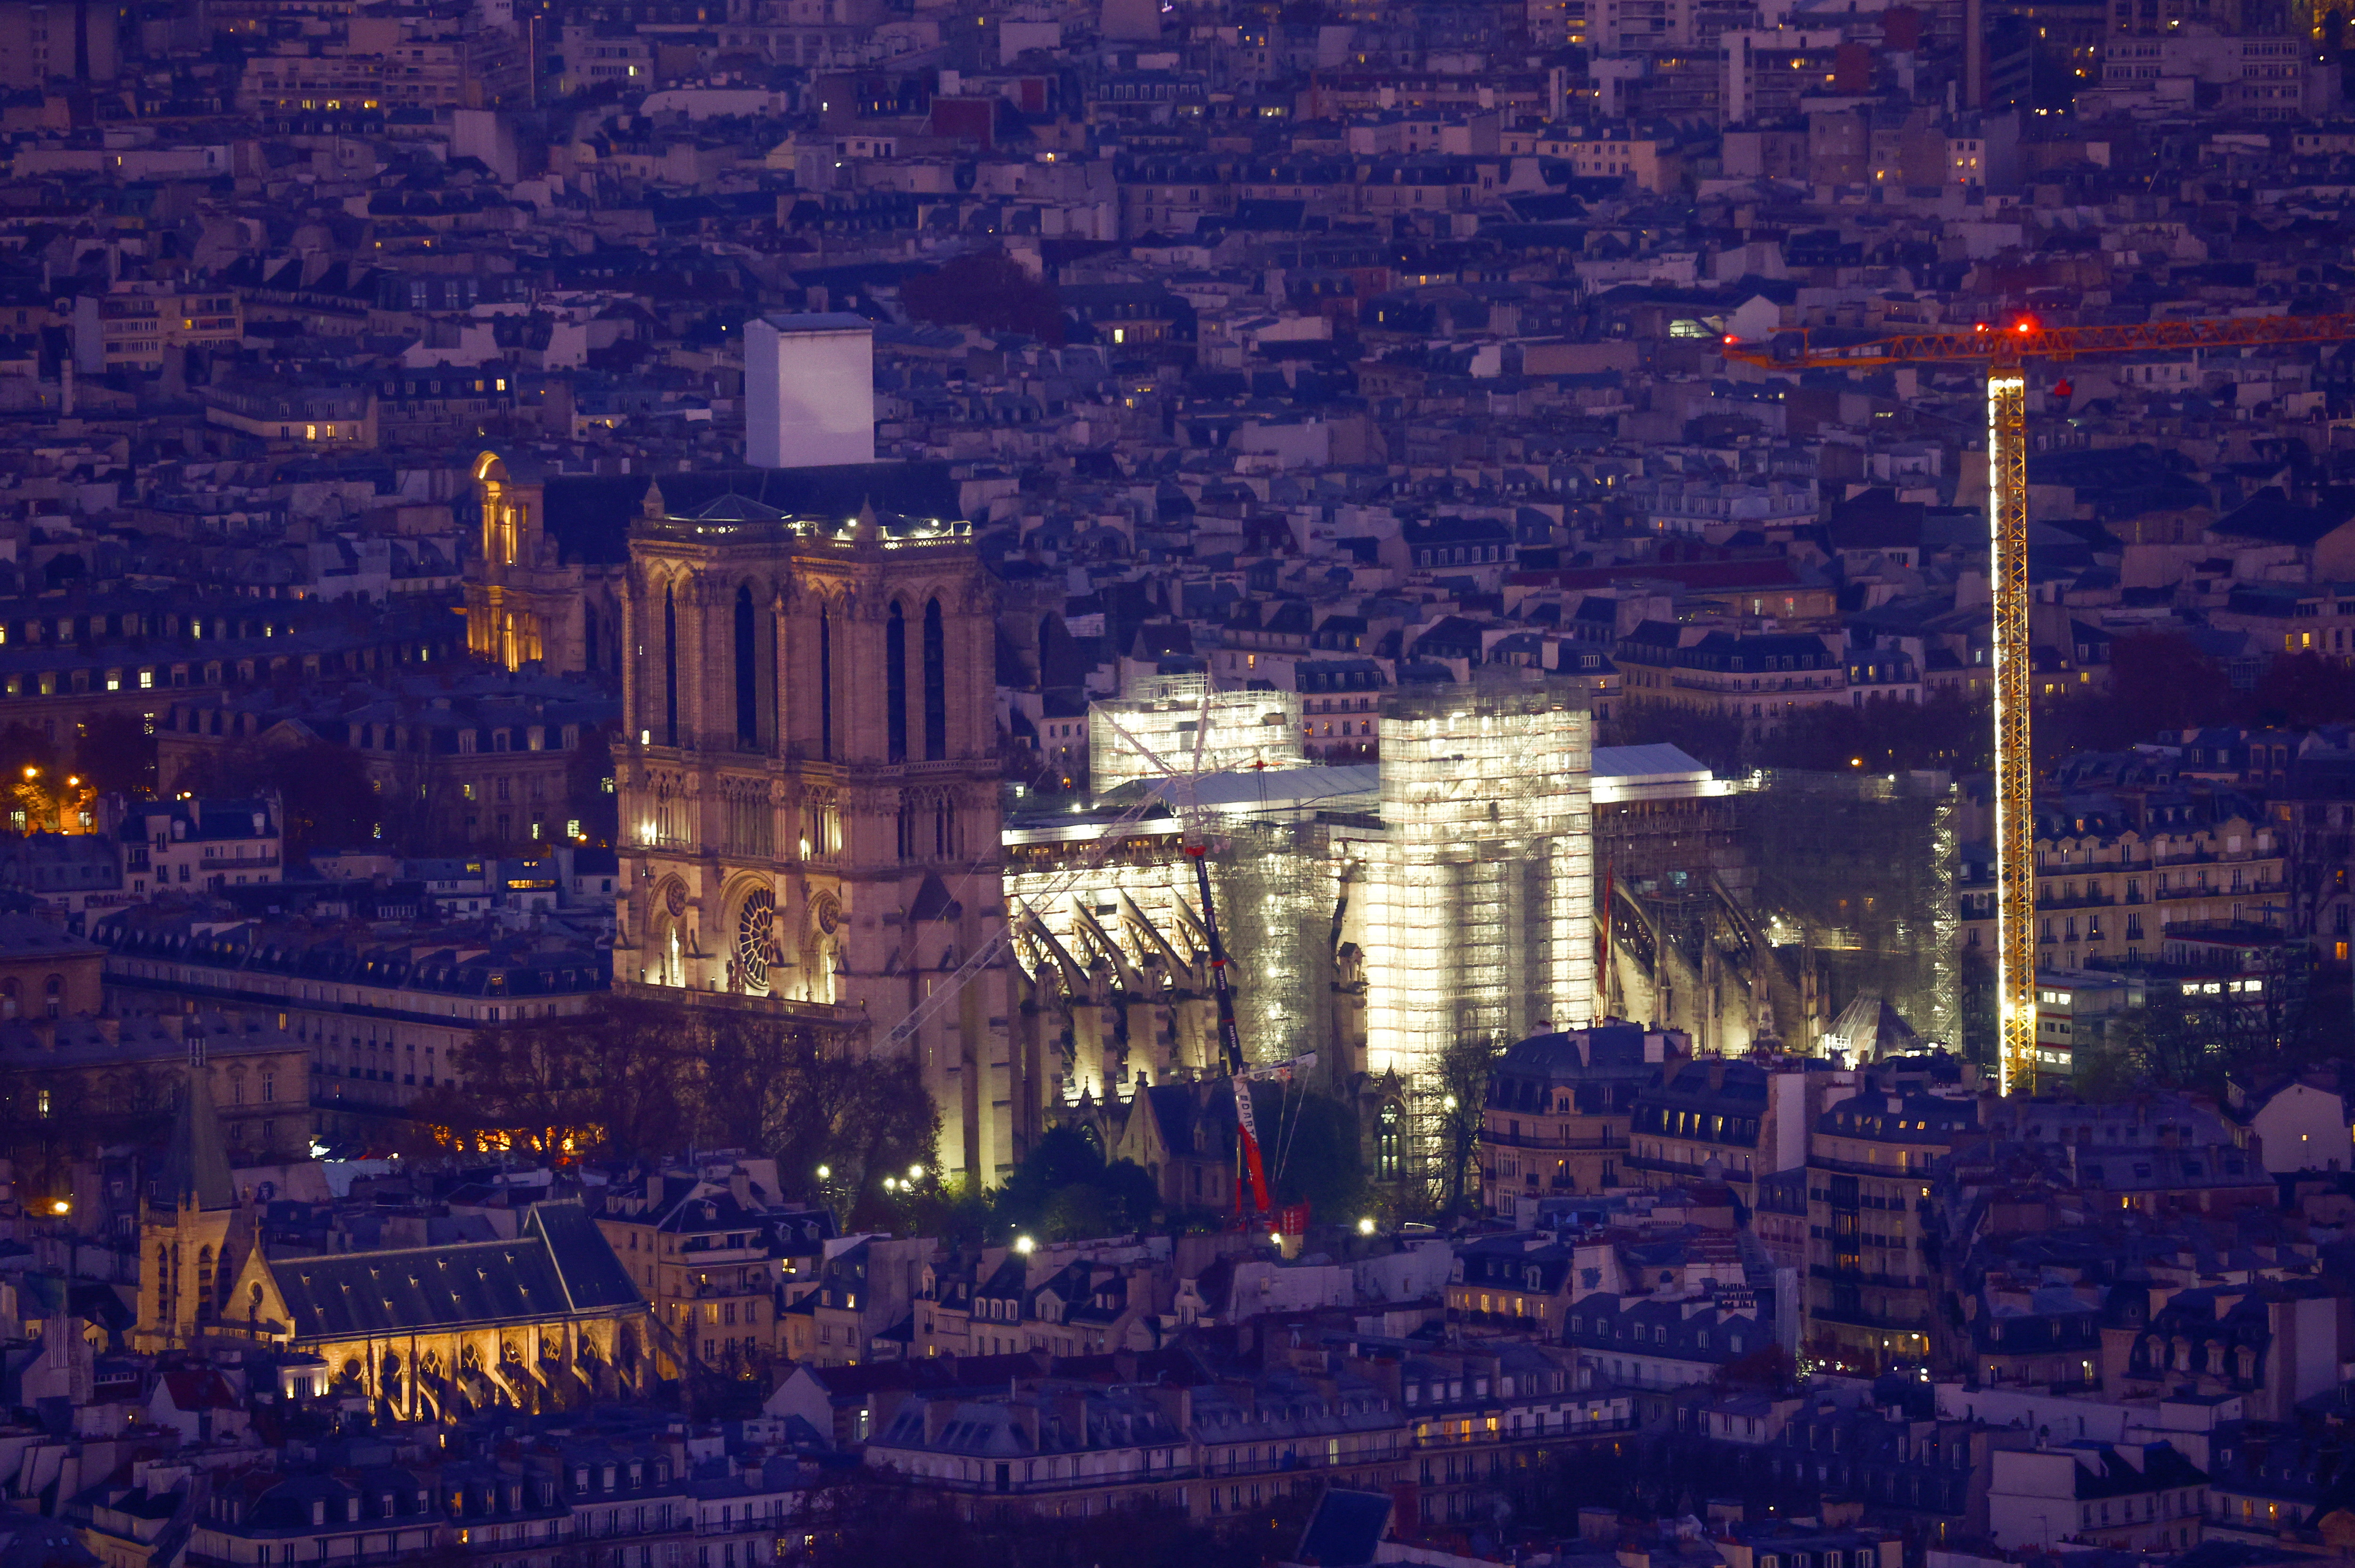 La catedral de Notre Dame tendría fecha de reapertura: el 8 de diciembre de 2024, según voceros del Ministerio de Cultura de Francia. Aquí, una vista área tomada en diciembre de 2022 (Foto: REUTERS/Gonzalo Fuentes)